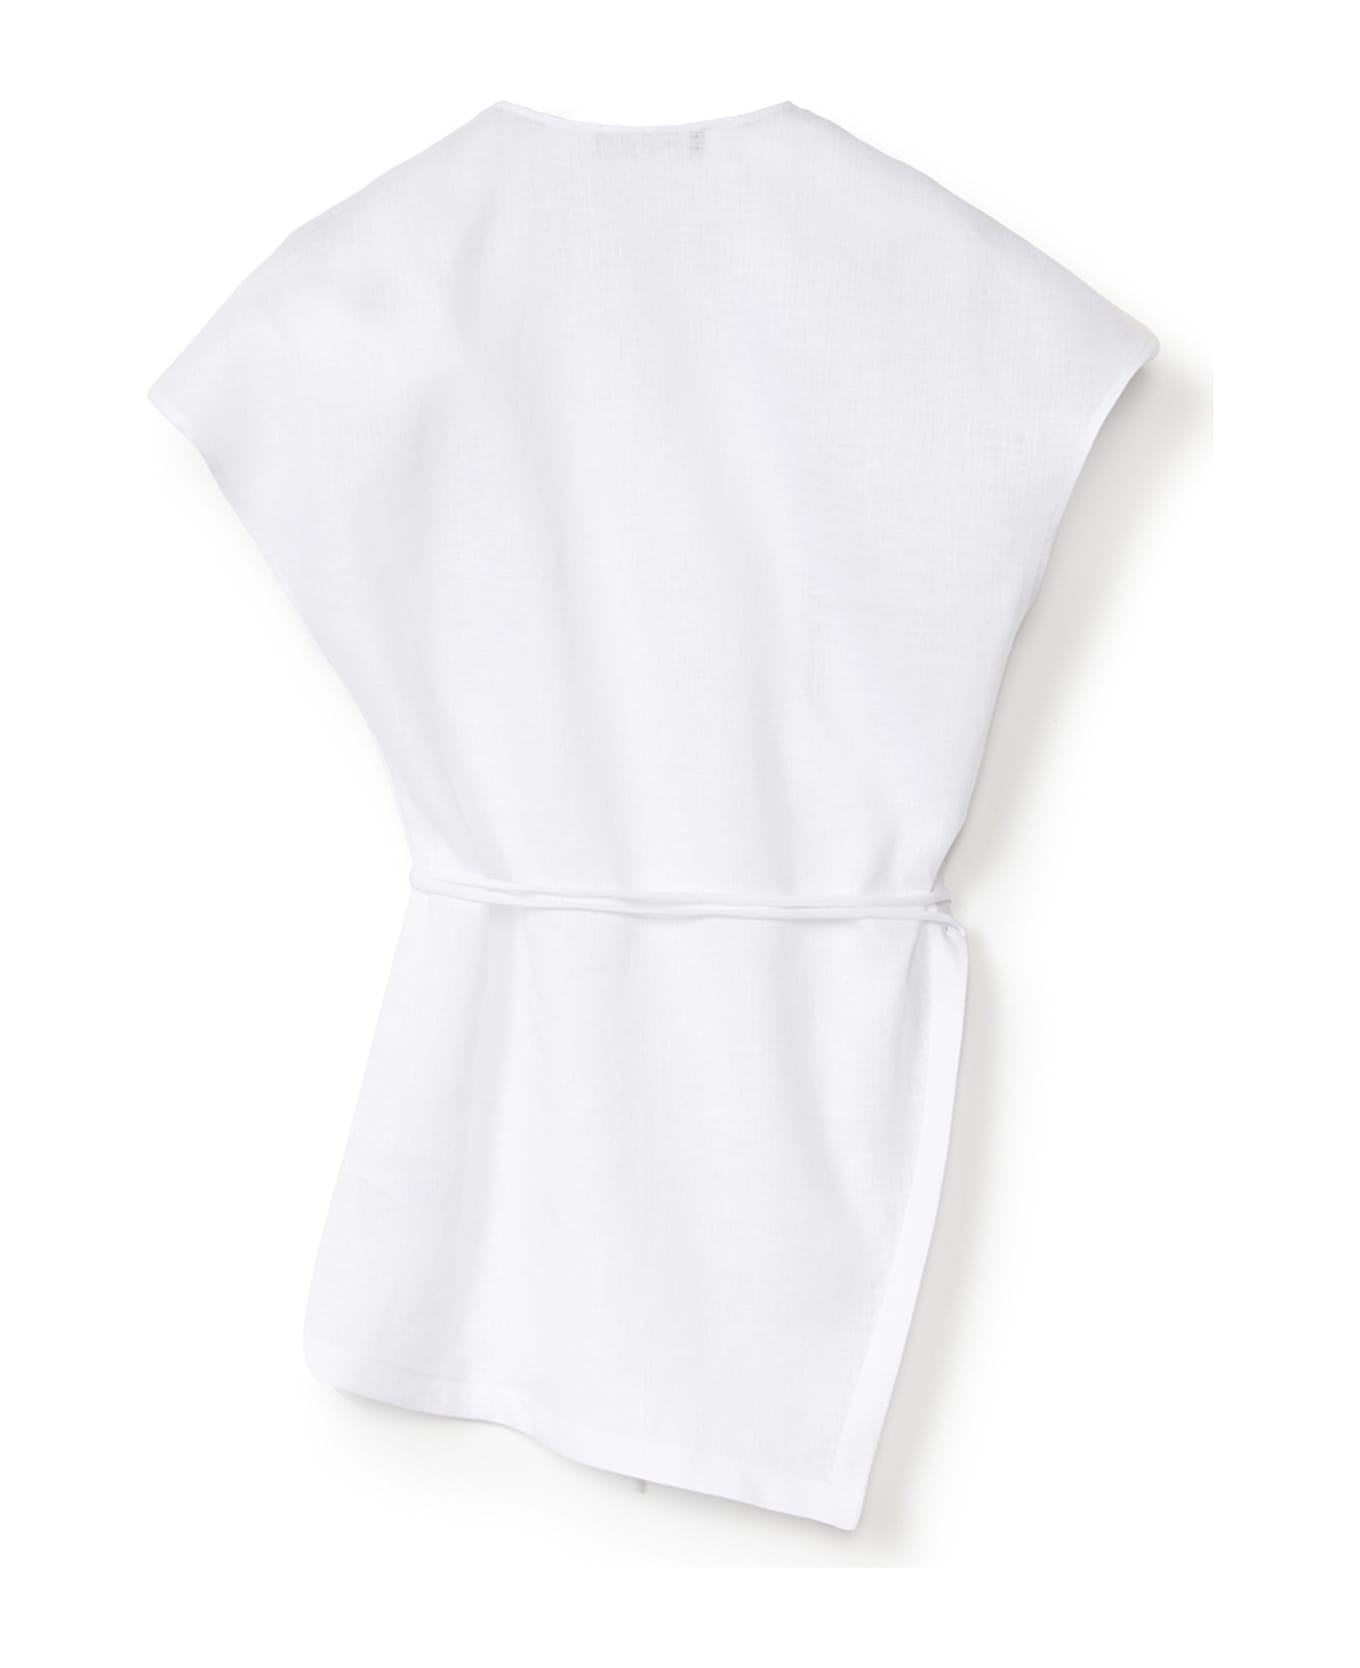 Fabiana Filippi White Criss-cross Top In Wool And Silk - BIANCO OTTICO Tシャツ